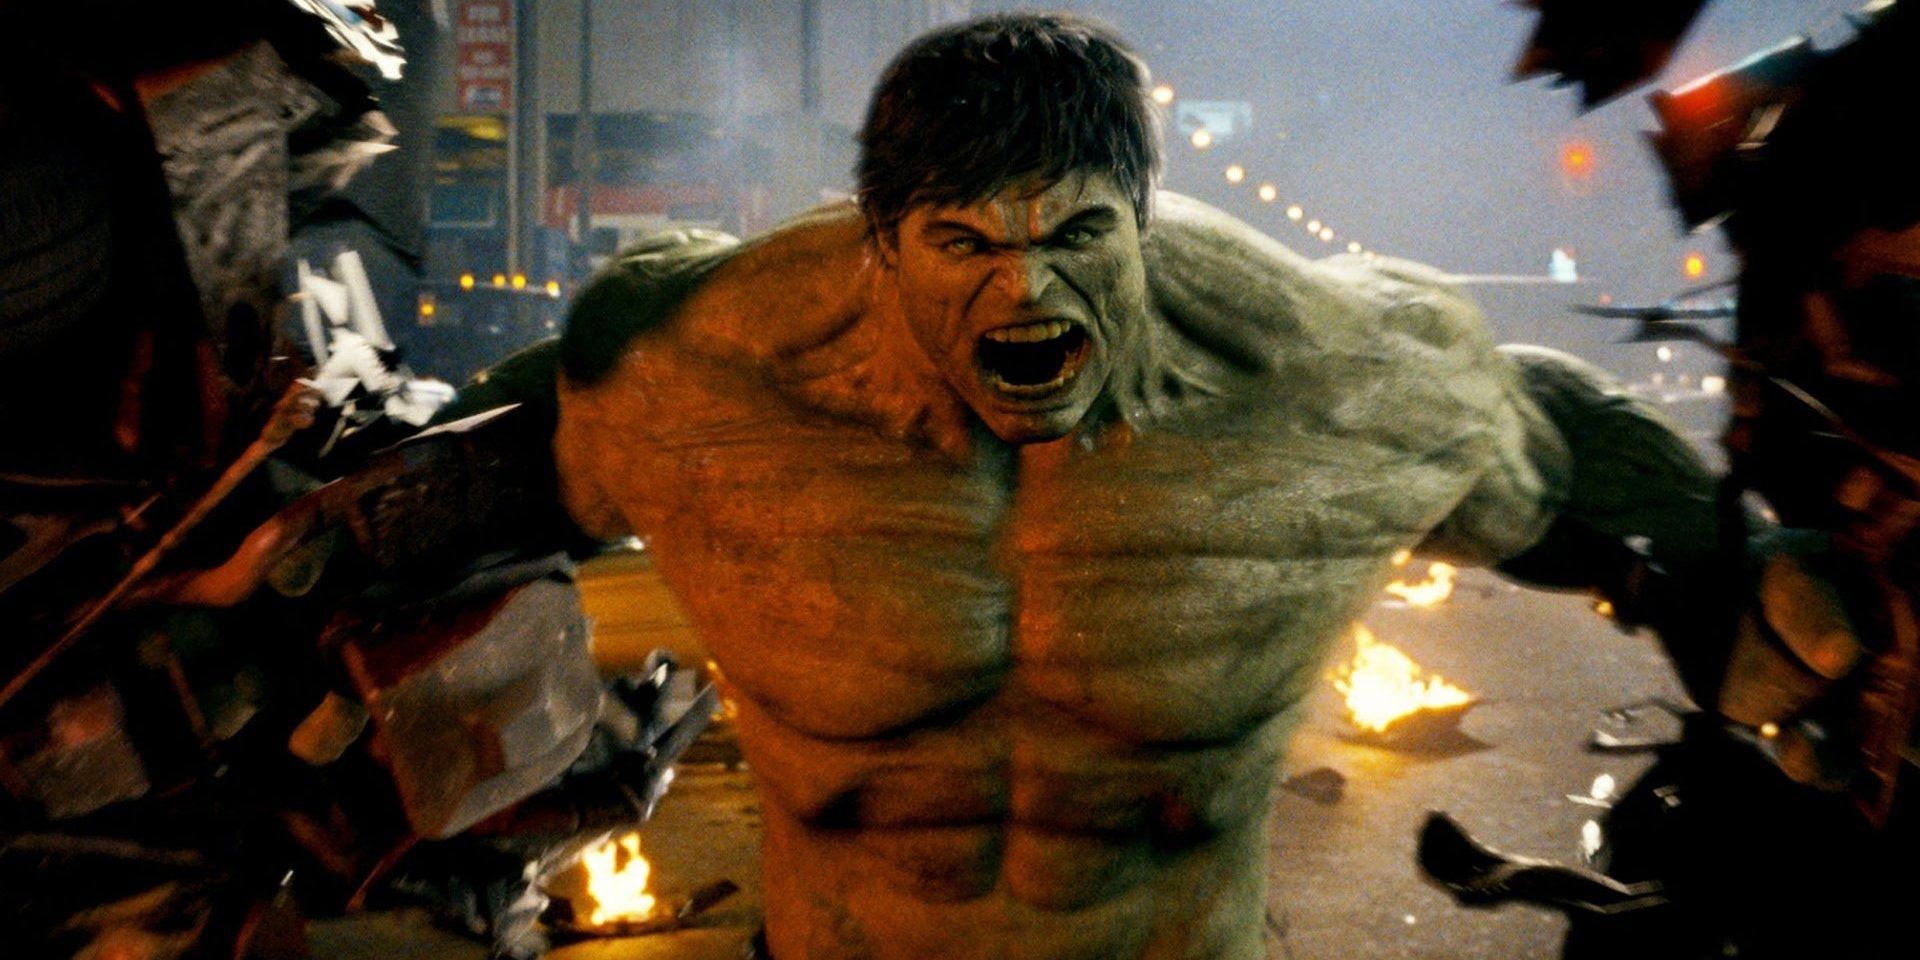 The Hulk ripping a car apart in The Incredible Hulk (2008)